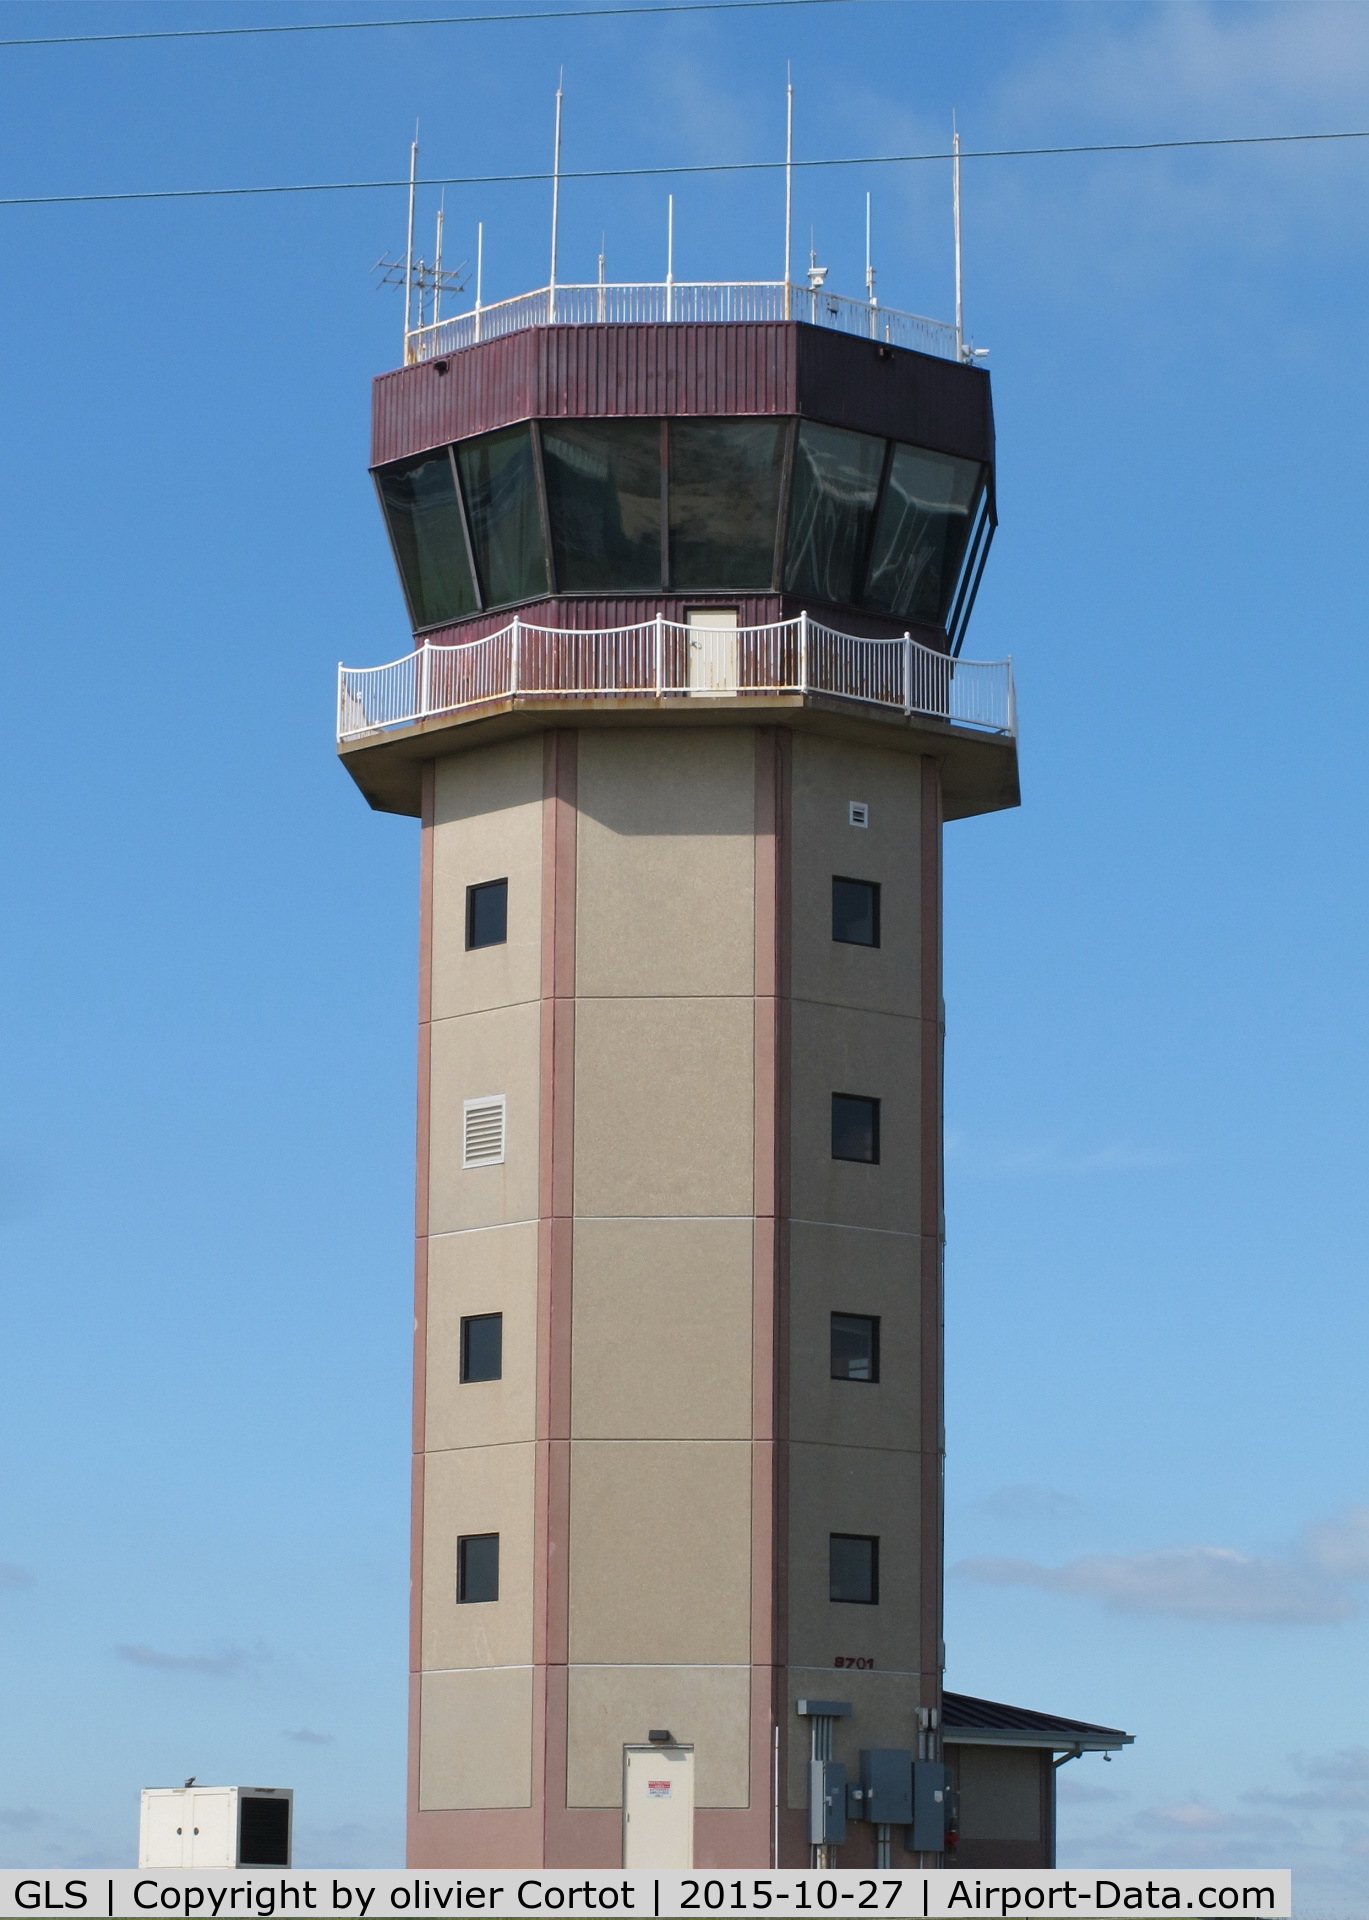 Scholes International At Galveston Airport (GLS) - The control tower